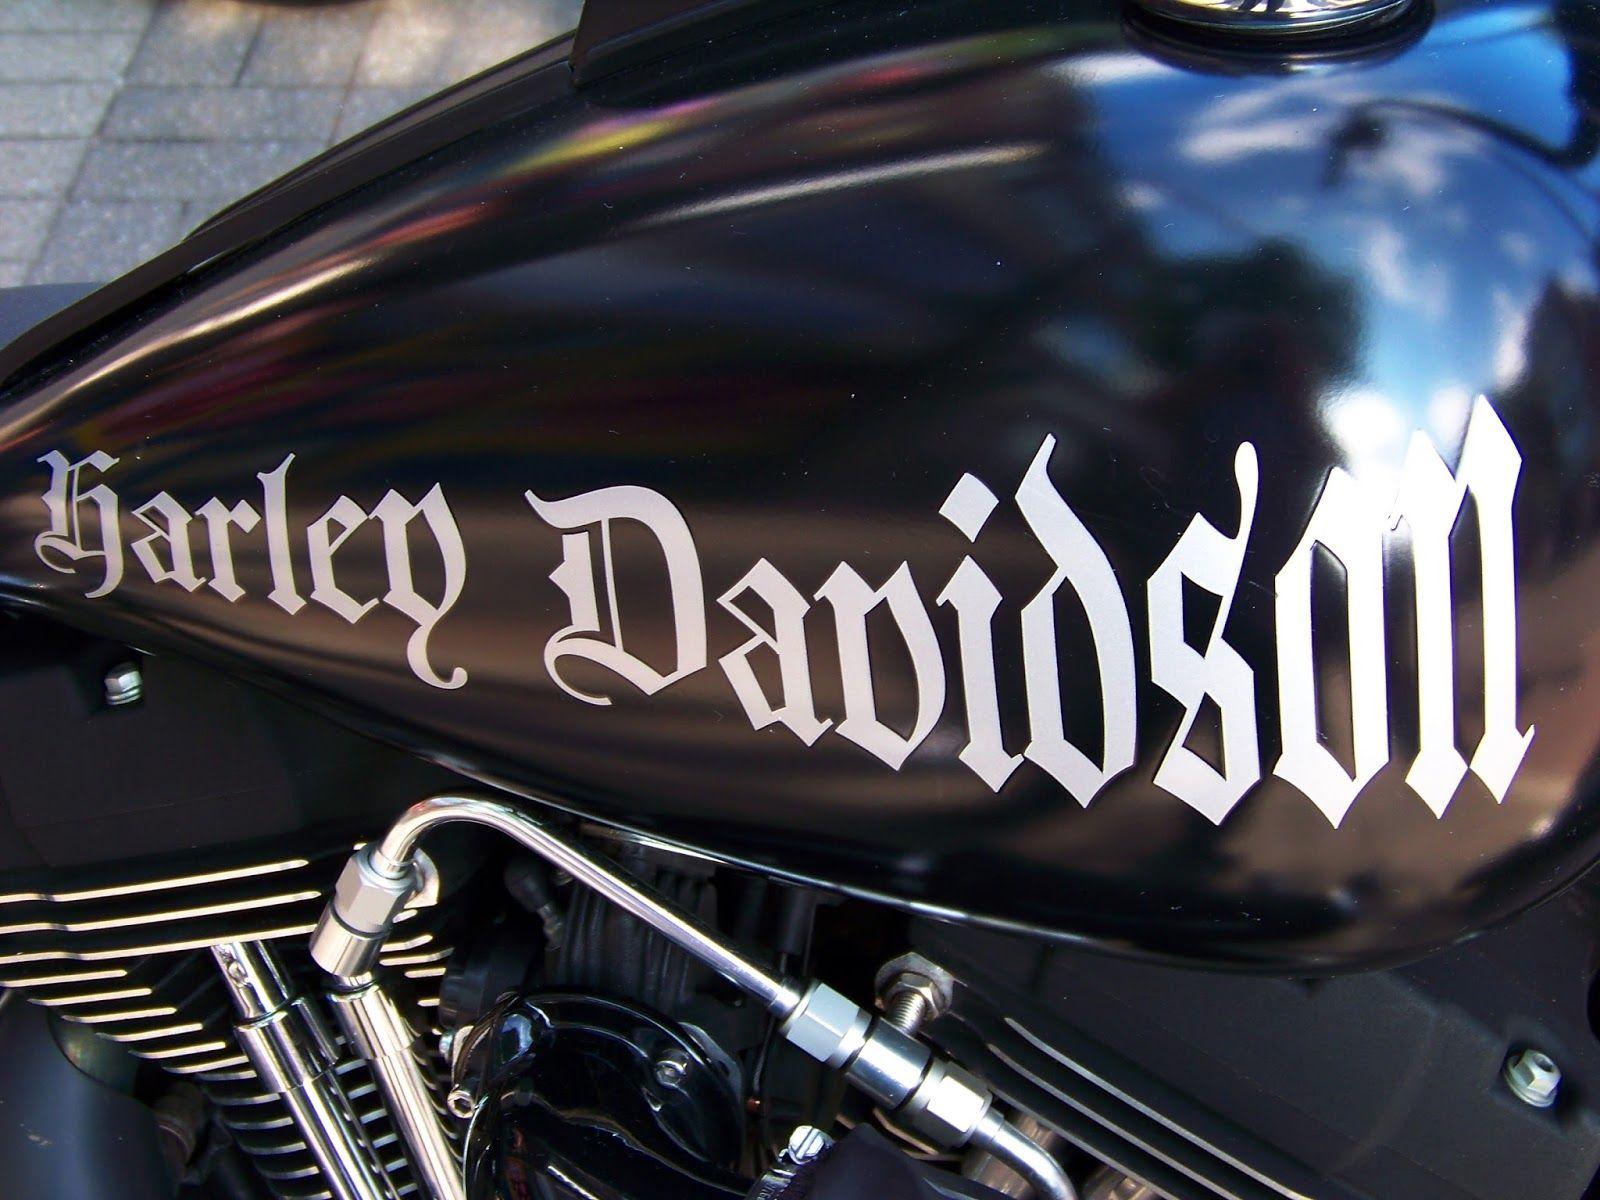 Motorcycle Tank Logo - Harley Davidson tank logo's. New Design Motorcycle Modification